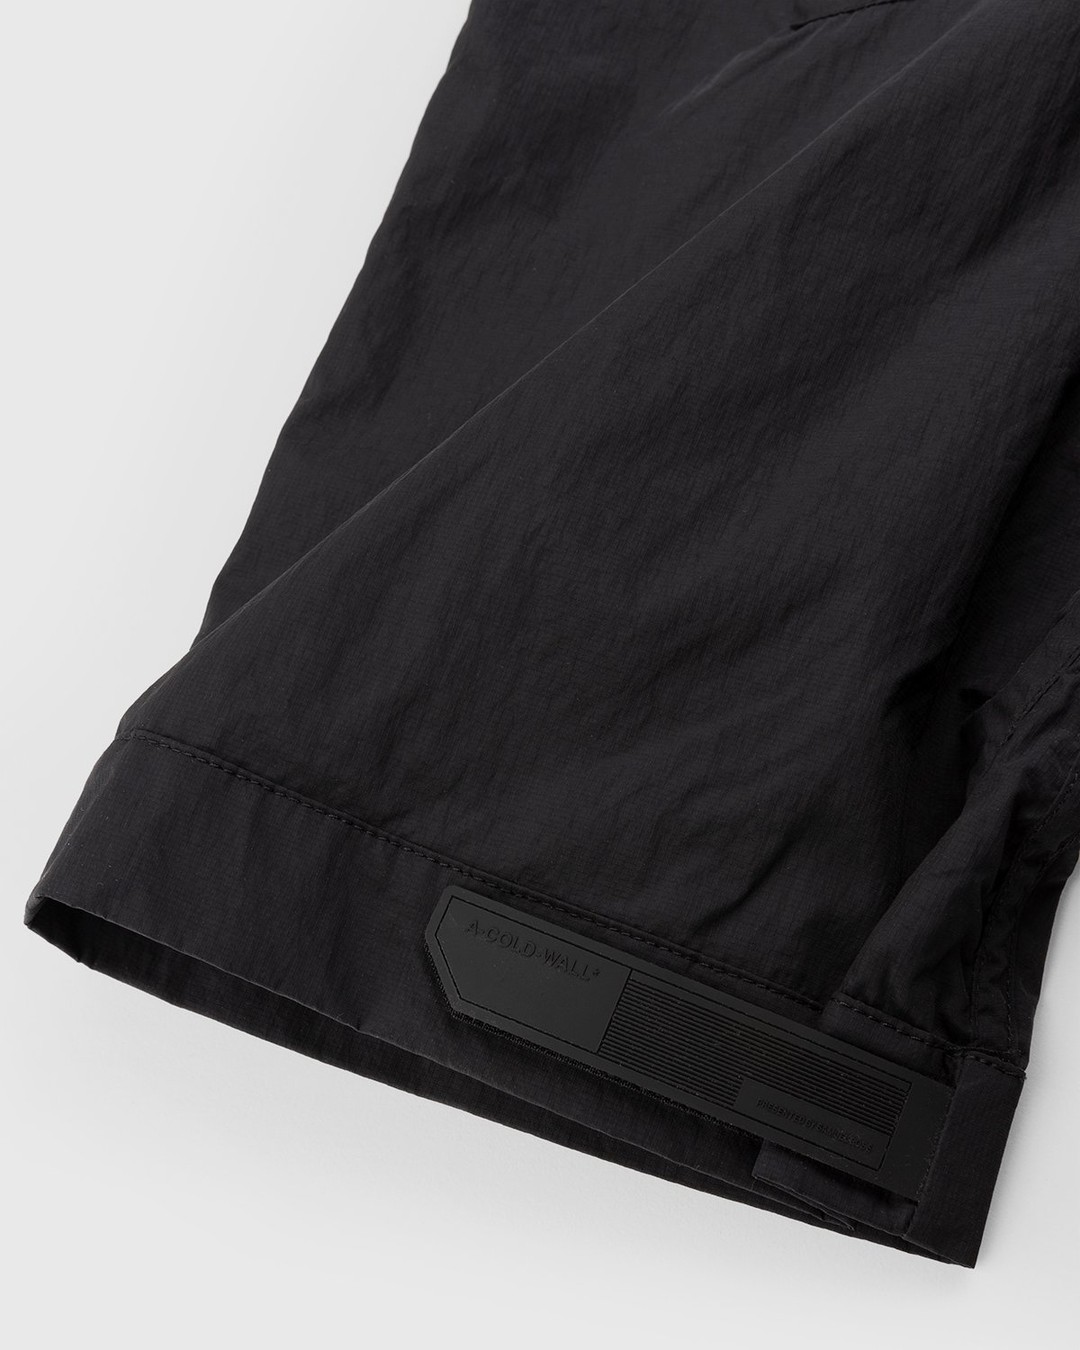 A-Cold-Wall* – Portage Pant Black - Pants - Black - Image 5